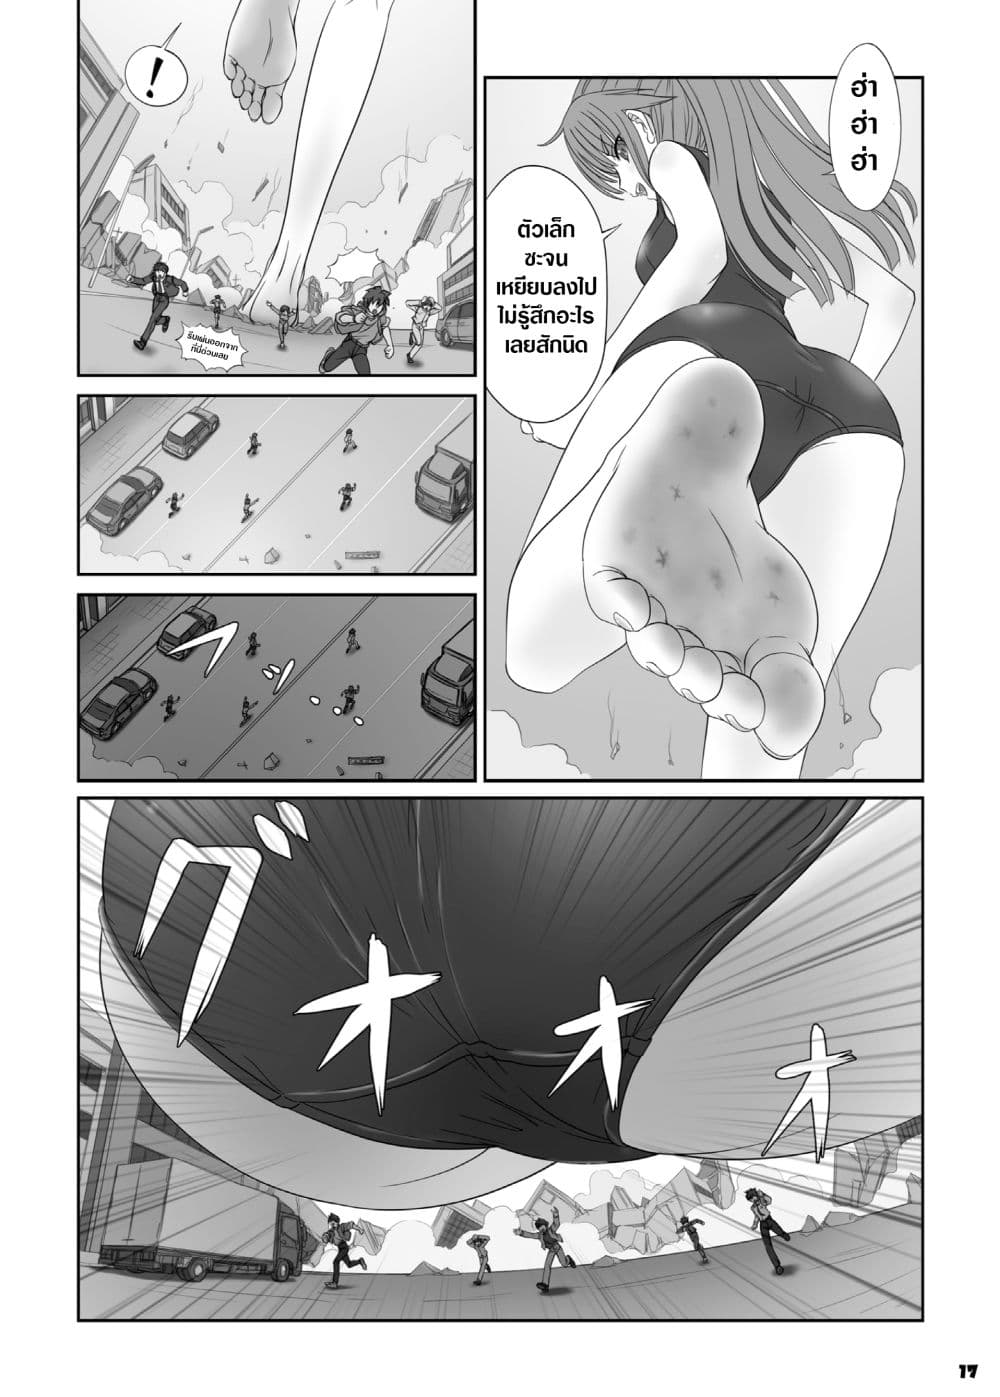 Toaru Shoujo no Miniature Play A Certain Specific Girl's Miniature Play (Big Girl Crushed Us) 1 (5)